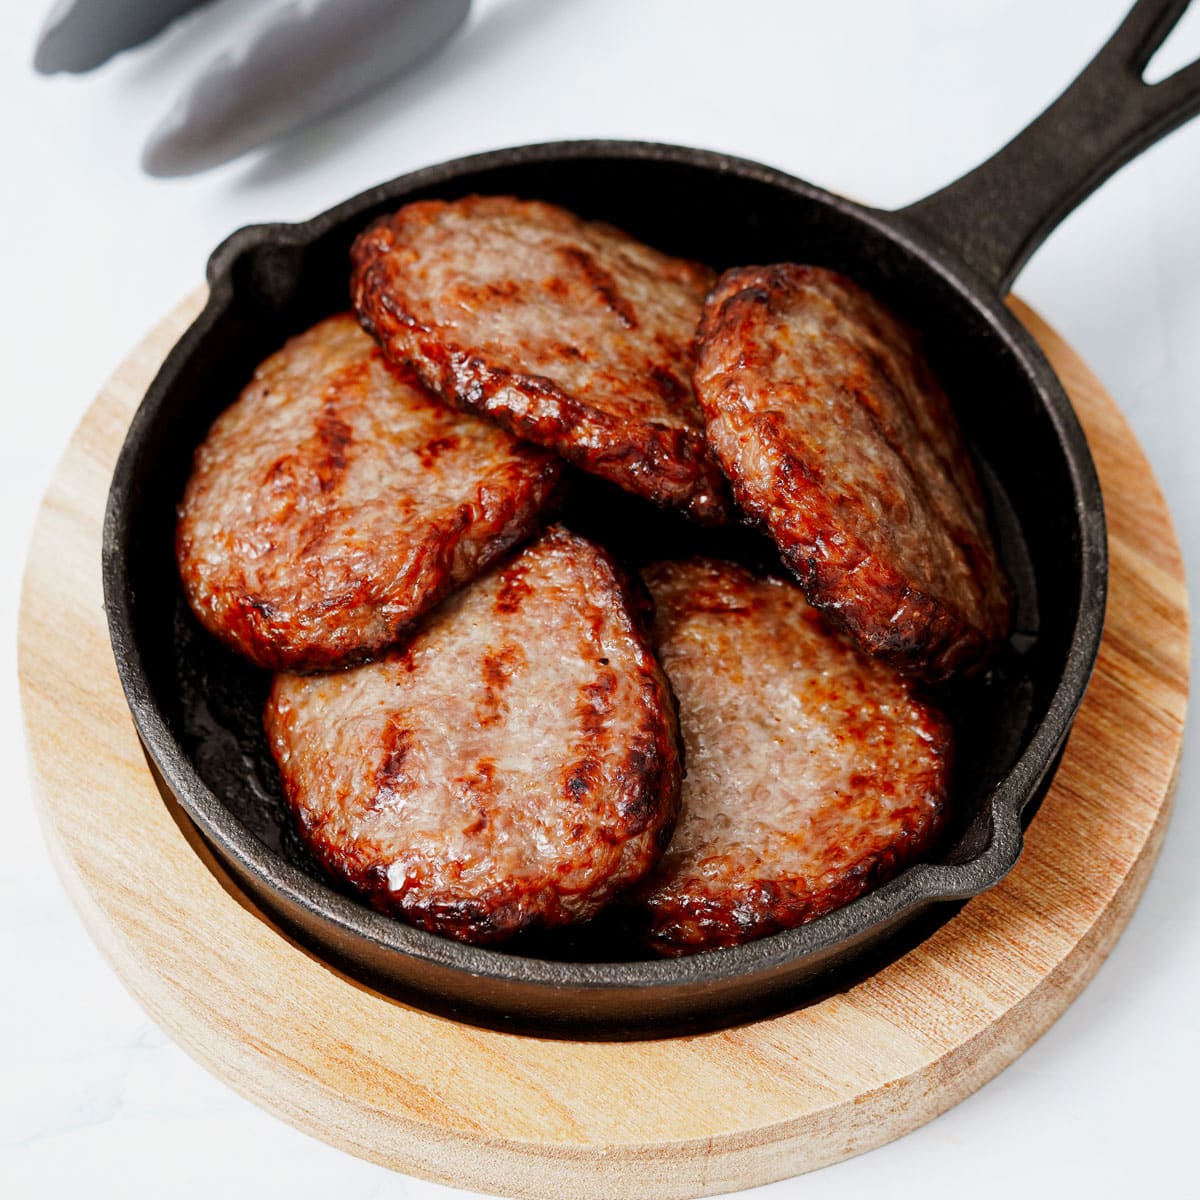 Air fried breakfast sausage patties in a mini cast iron pan